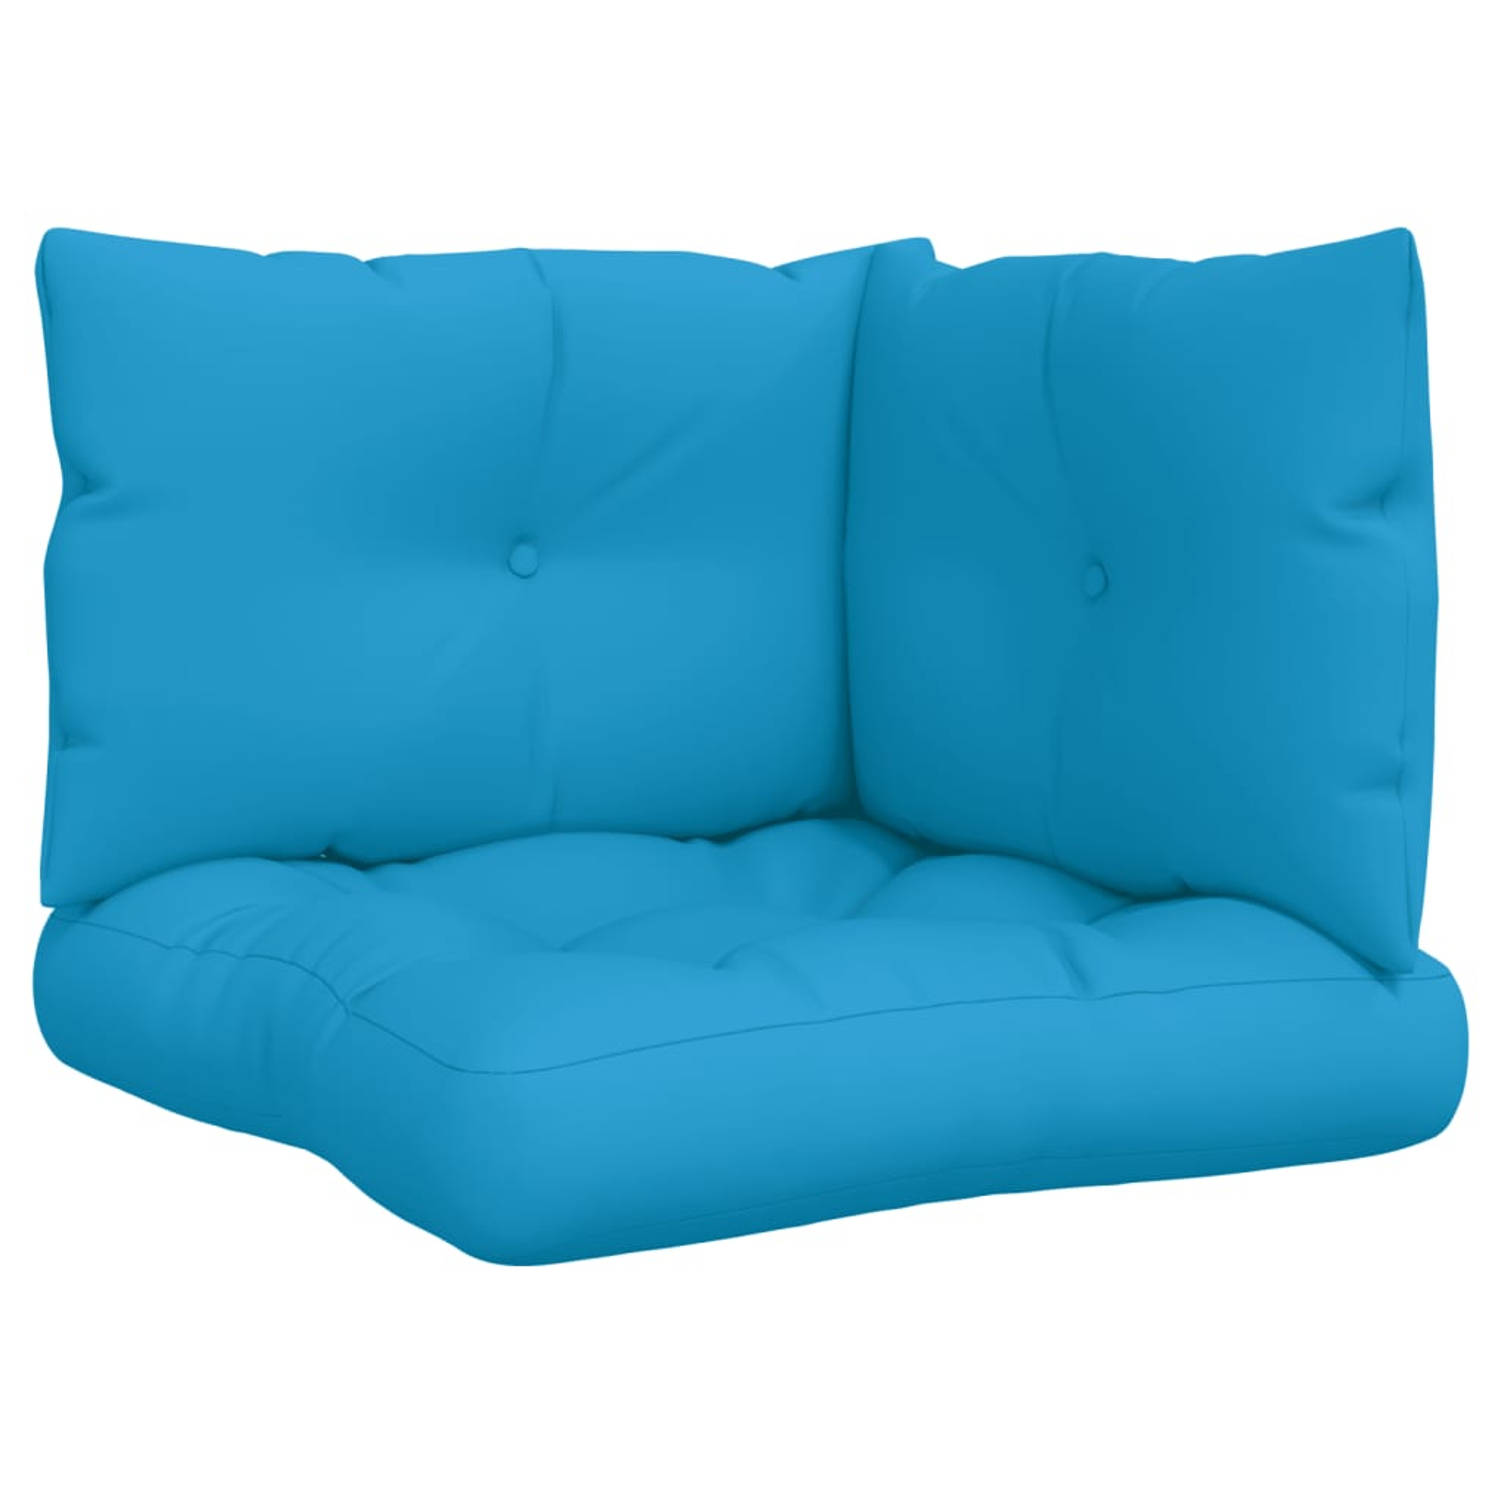 The Living Store Palletkussens - Blauw - Polyester - Comfortabel en duurzaam - 61.5 x 60 x 10 cm - Waterafstotend